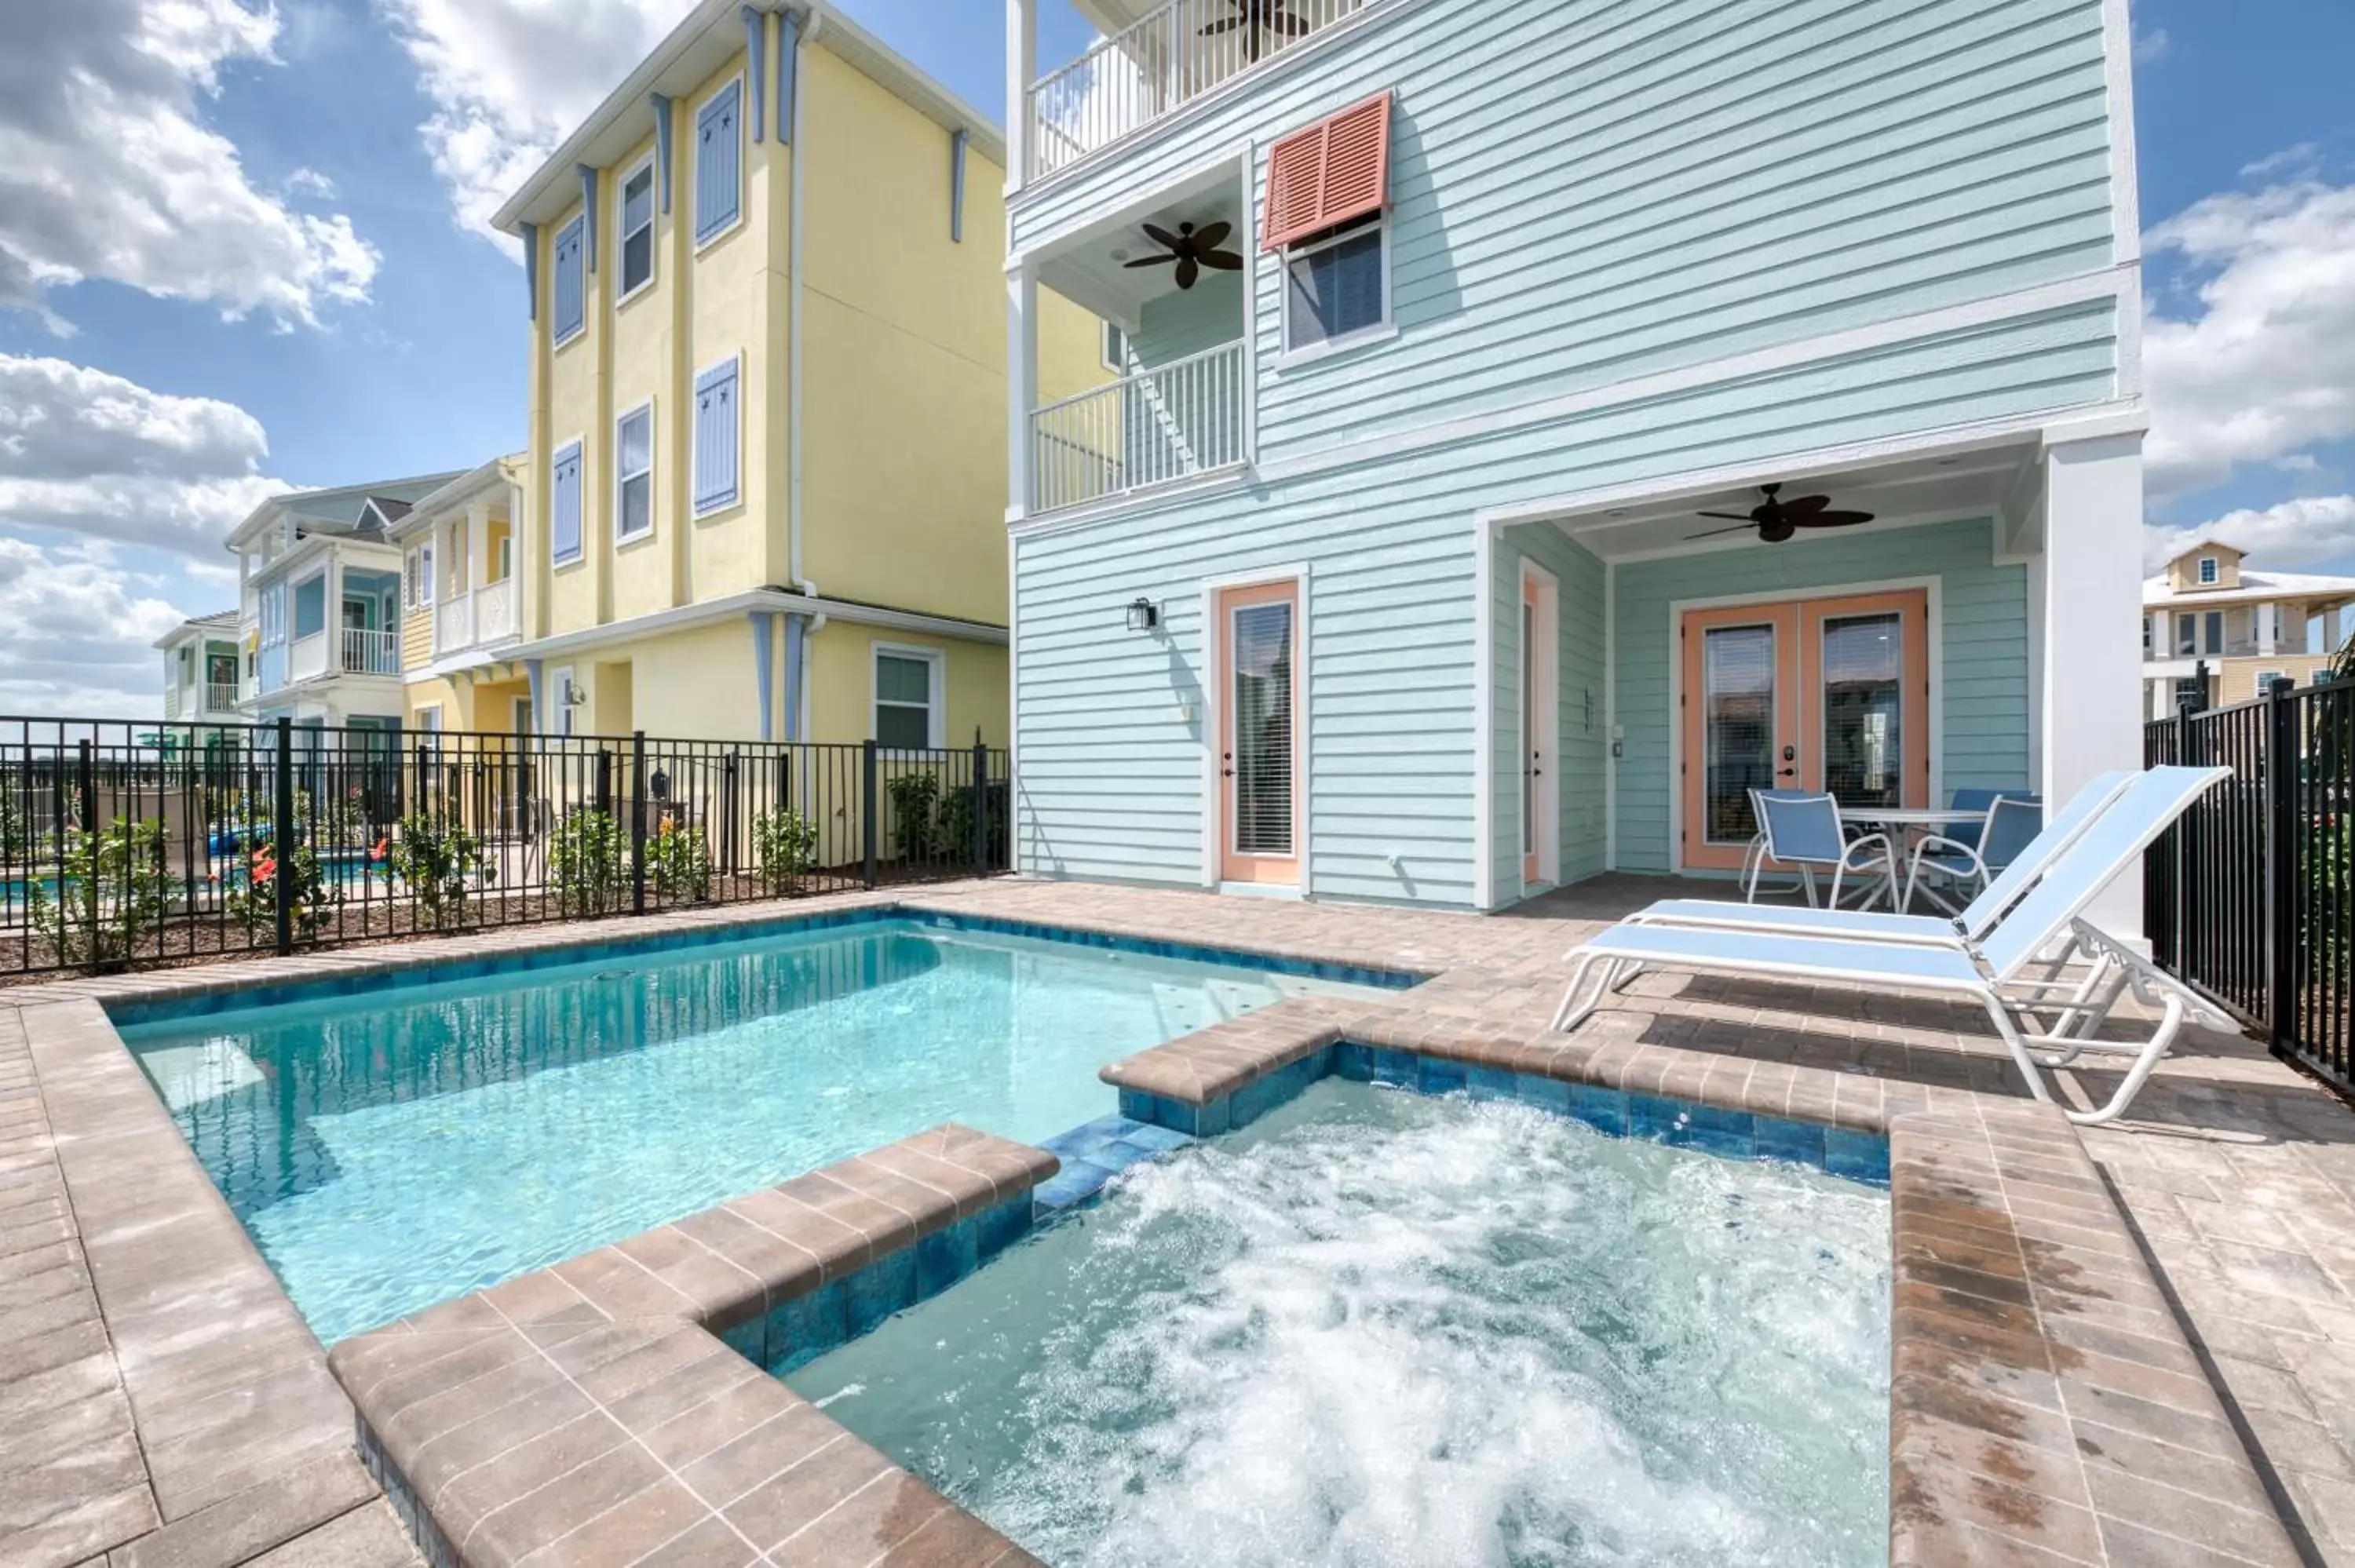 Swimming Pool in Margaritaville Resort Orlando